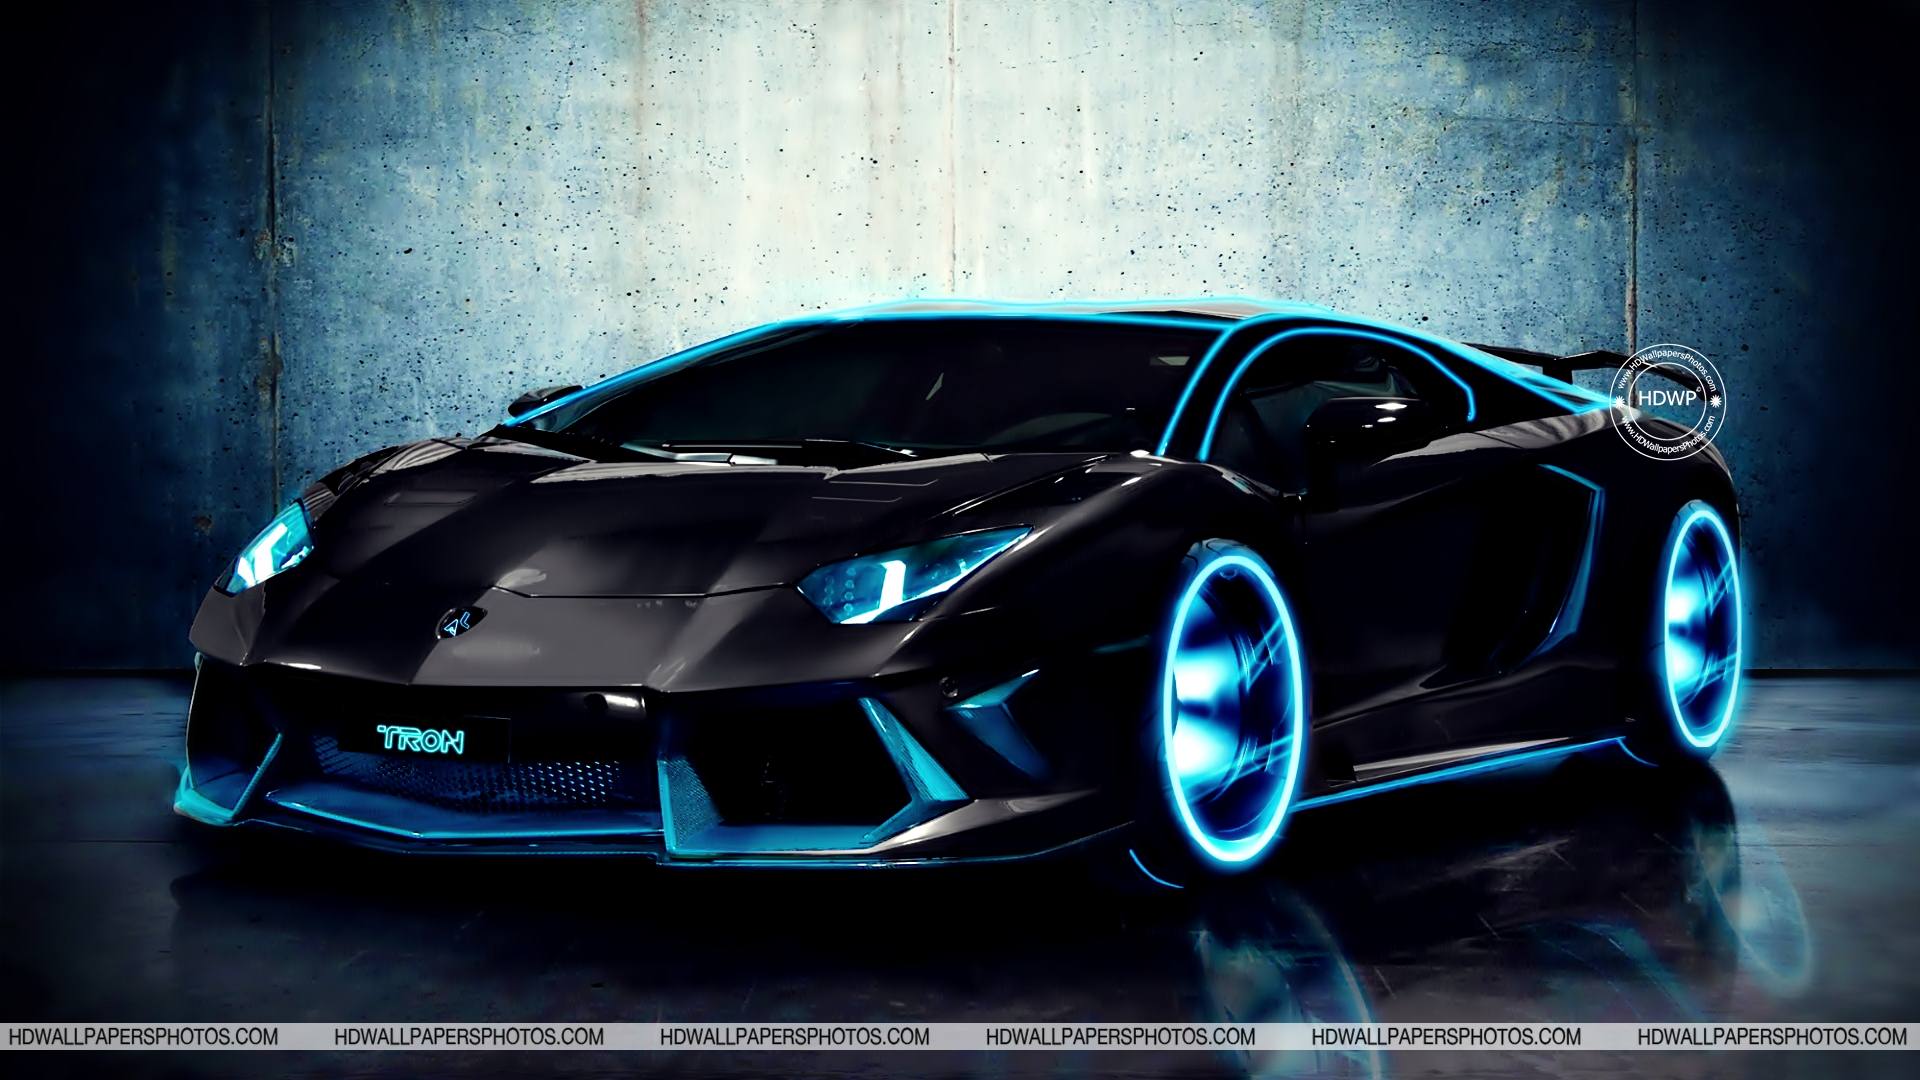 Tron Lamborghini Aventador HD Wallpaper Image Pictures